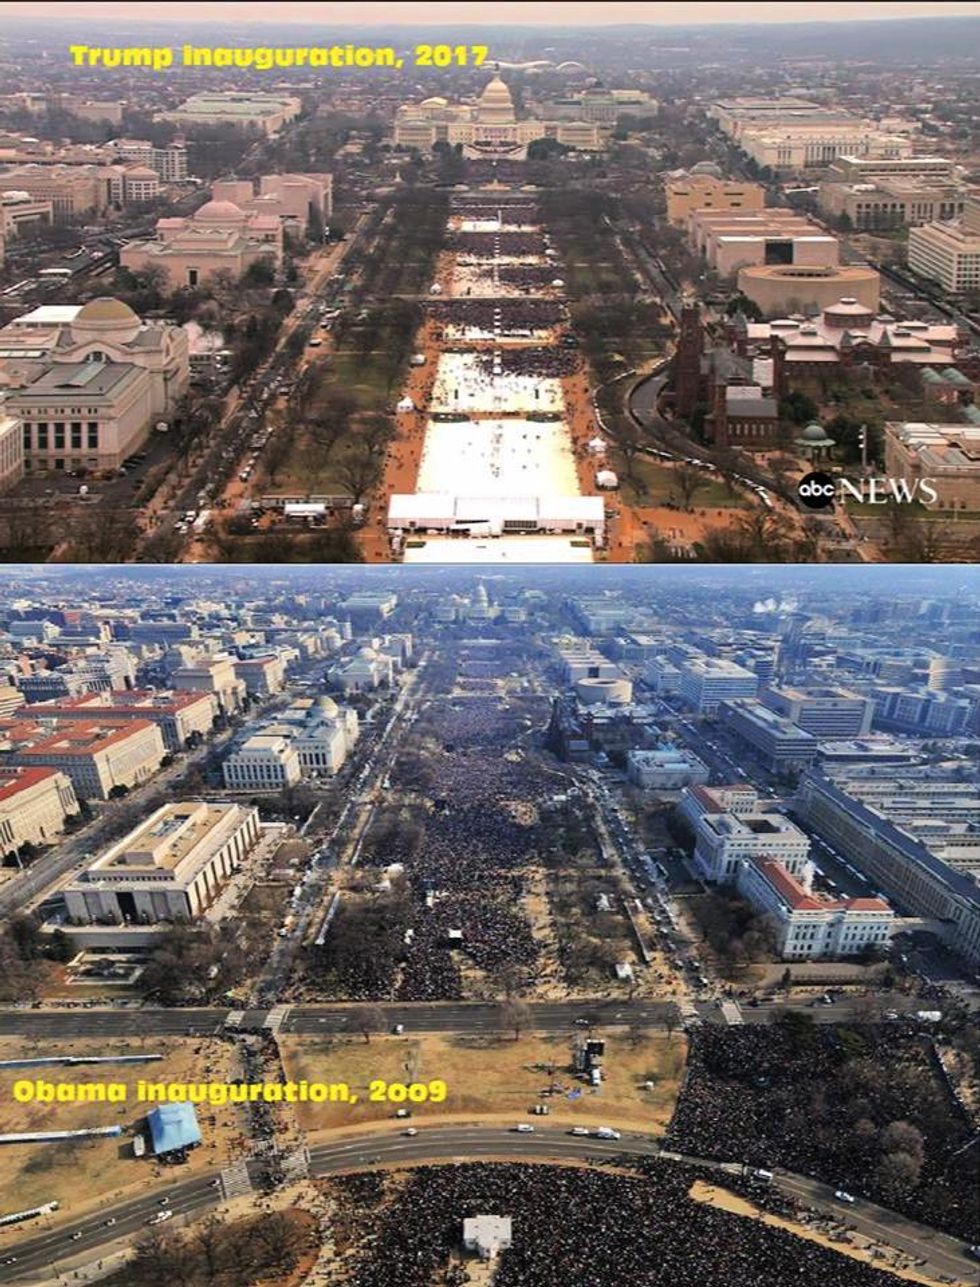 Comparison of Trump and Obama inaugural crowds